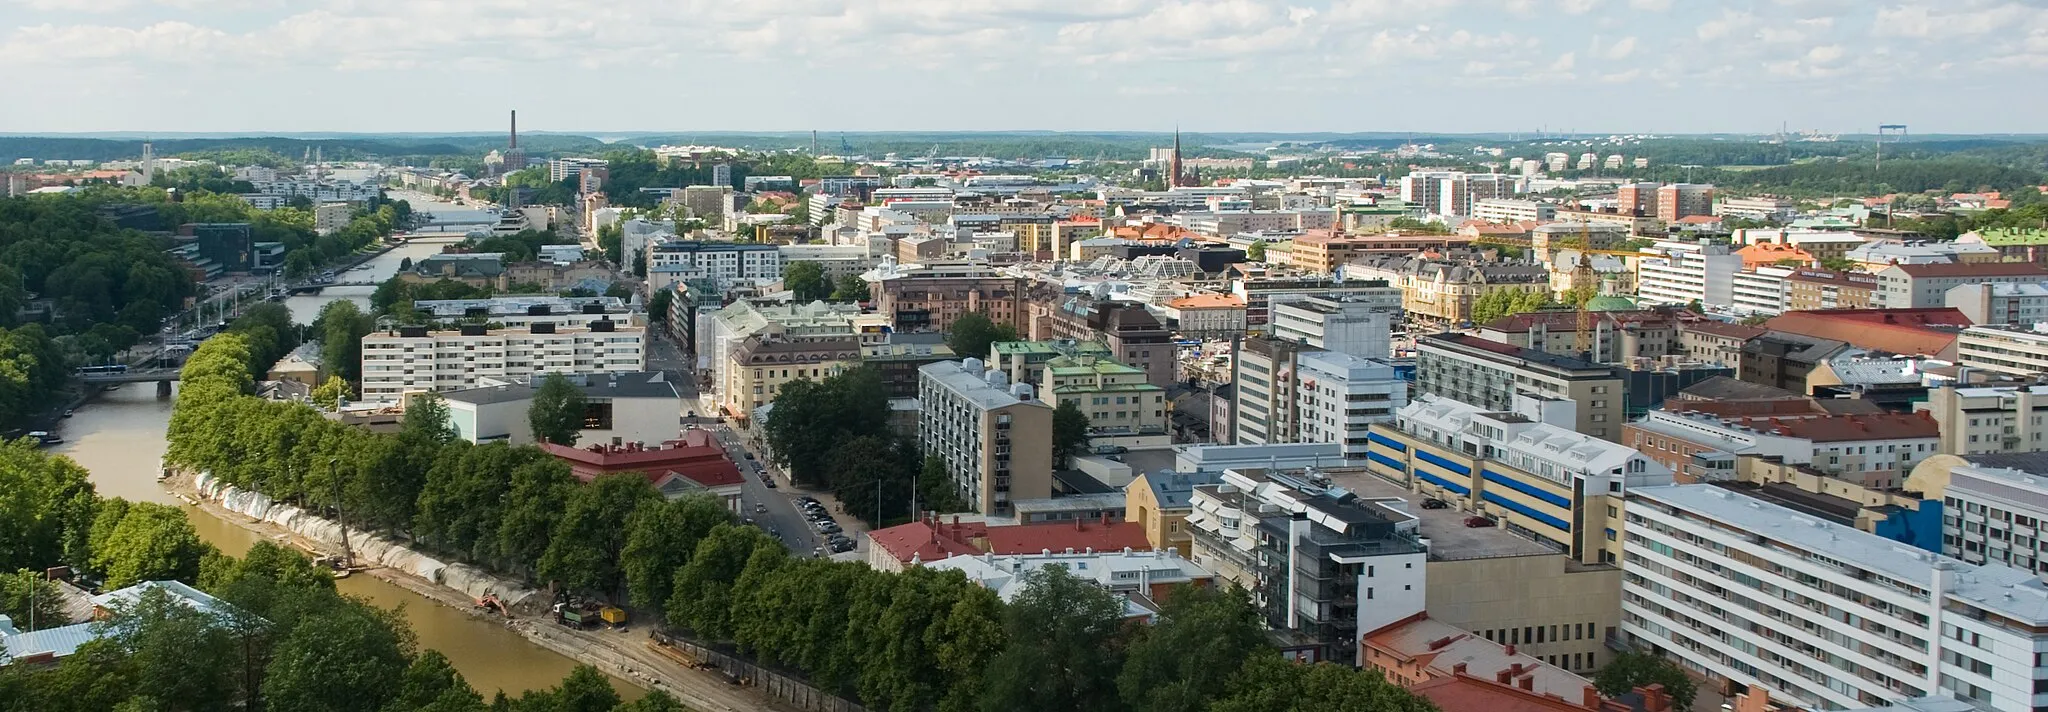 Image of Turku